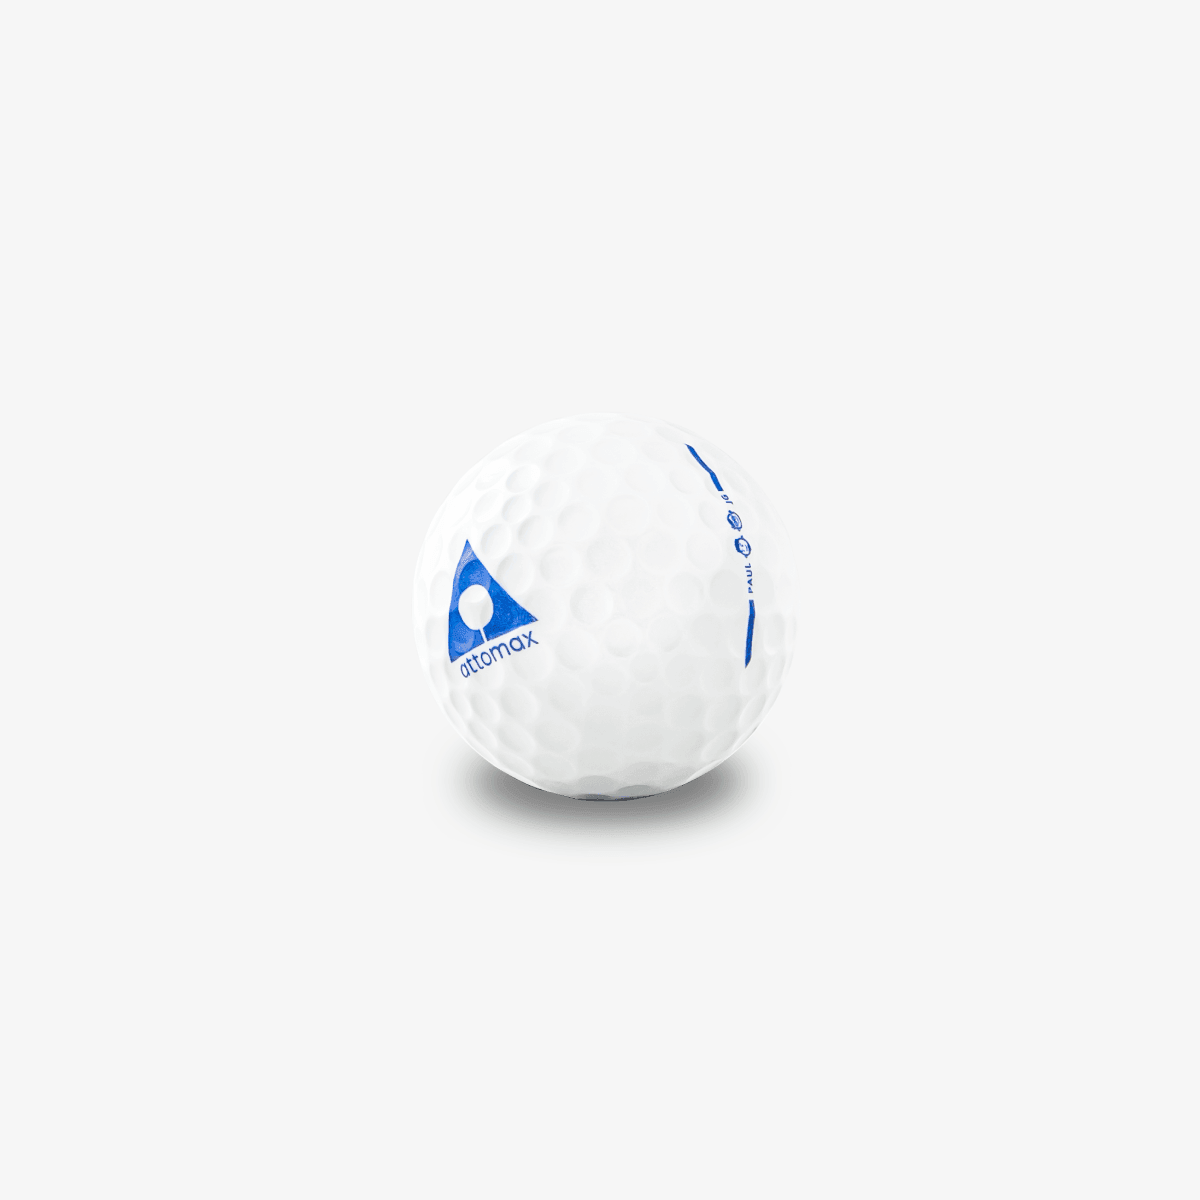 Attomax Golf Balls (Medium) - Half Dozen - Attomax® Golf